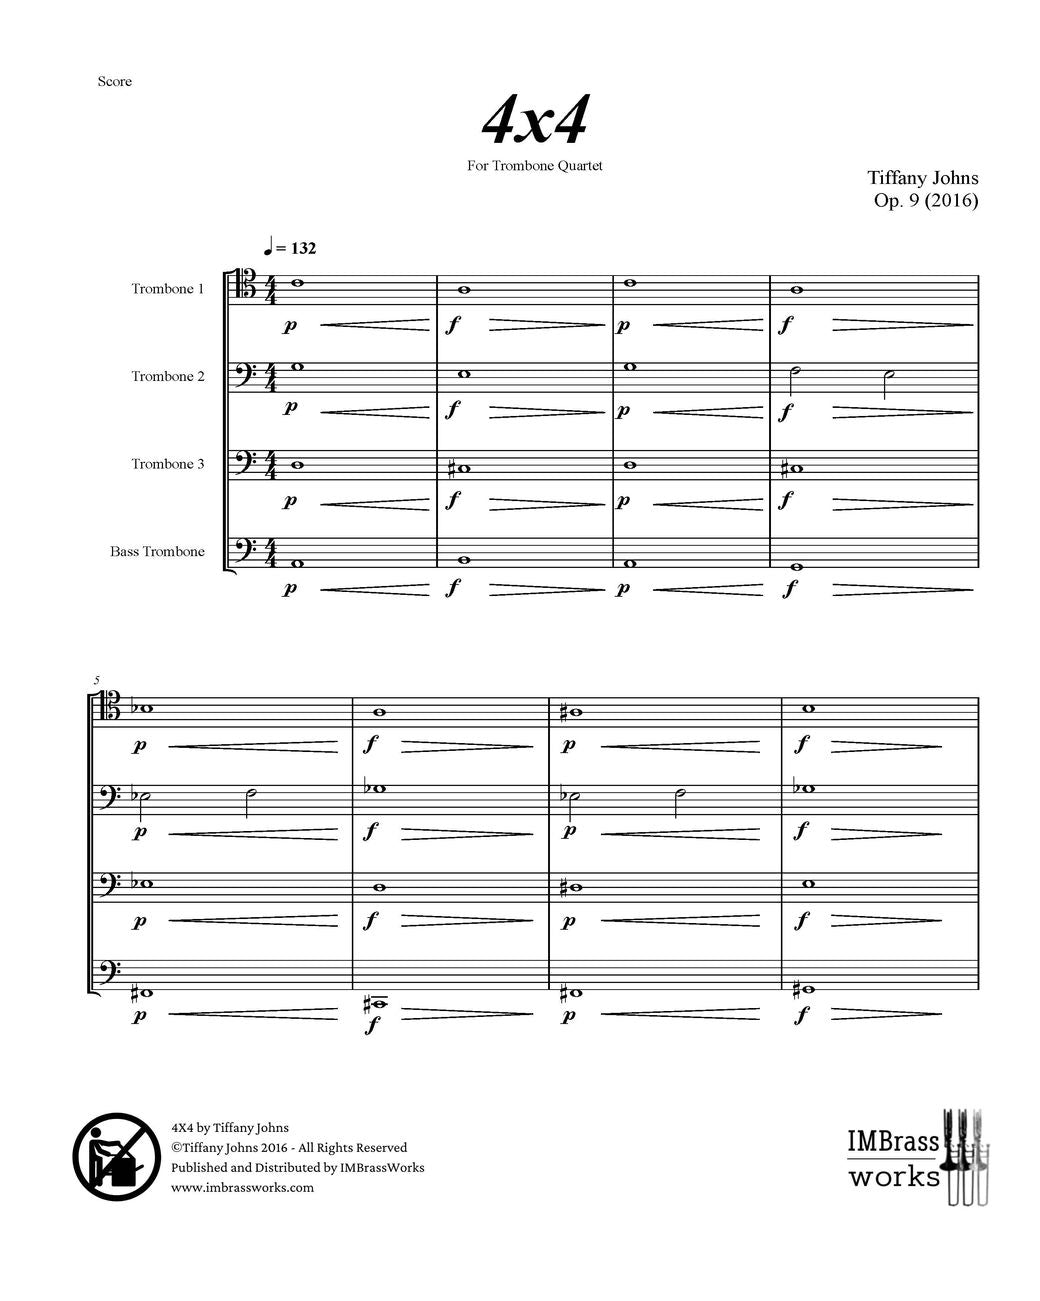 Tiffany Johns: 4X4 for Trombone Quartet